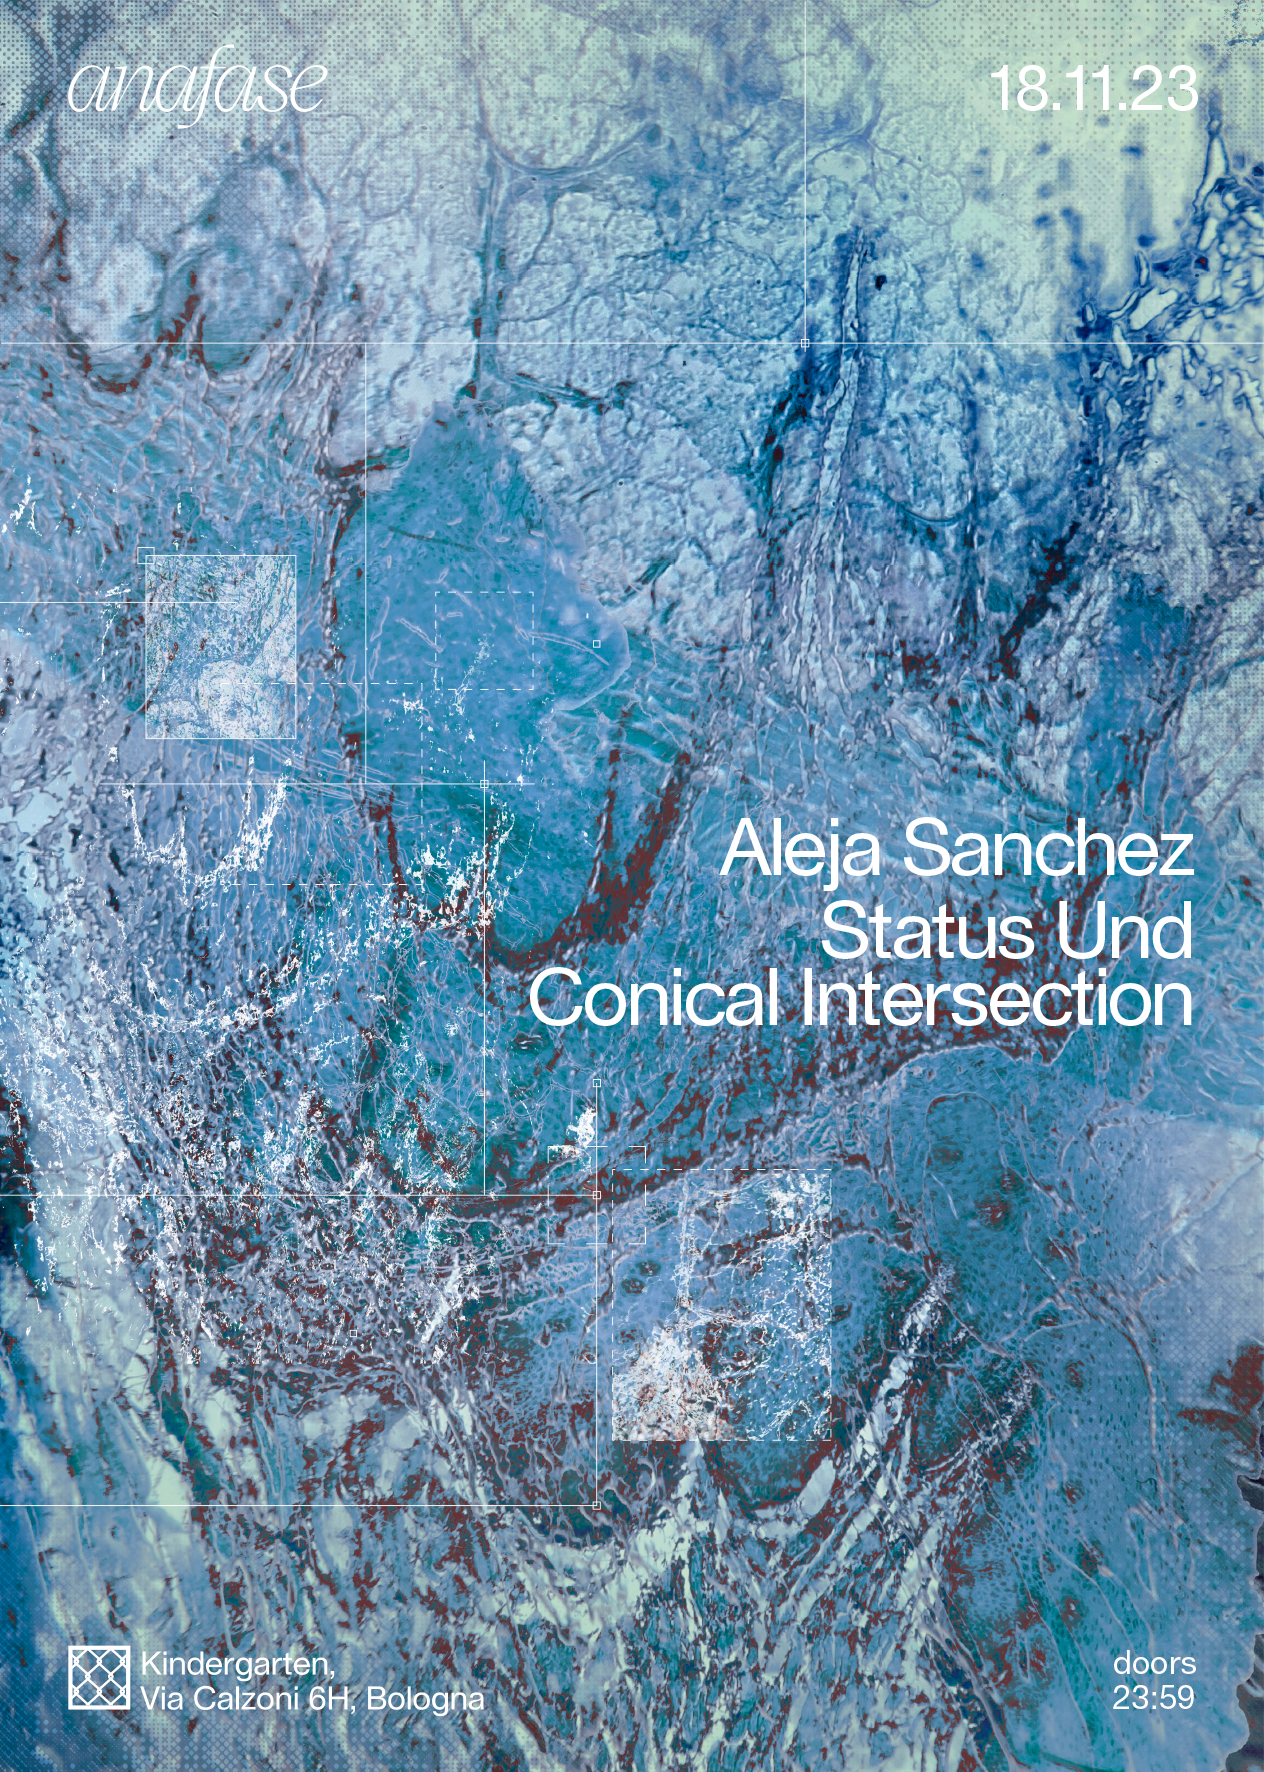 𝘢𝘯𝘢𝘧𝘢𝘴𝘦 with Aleja Sanchez, Status Und, Conical Intersection - フライヤー表